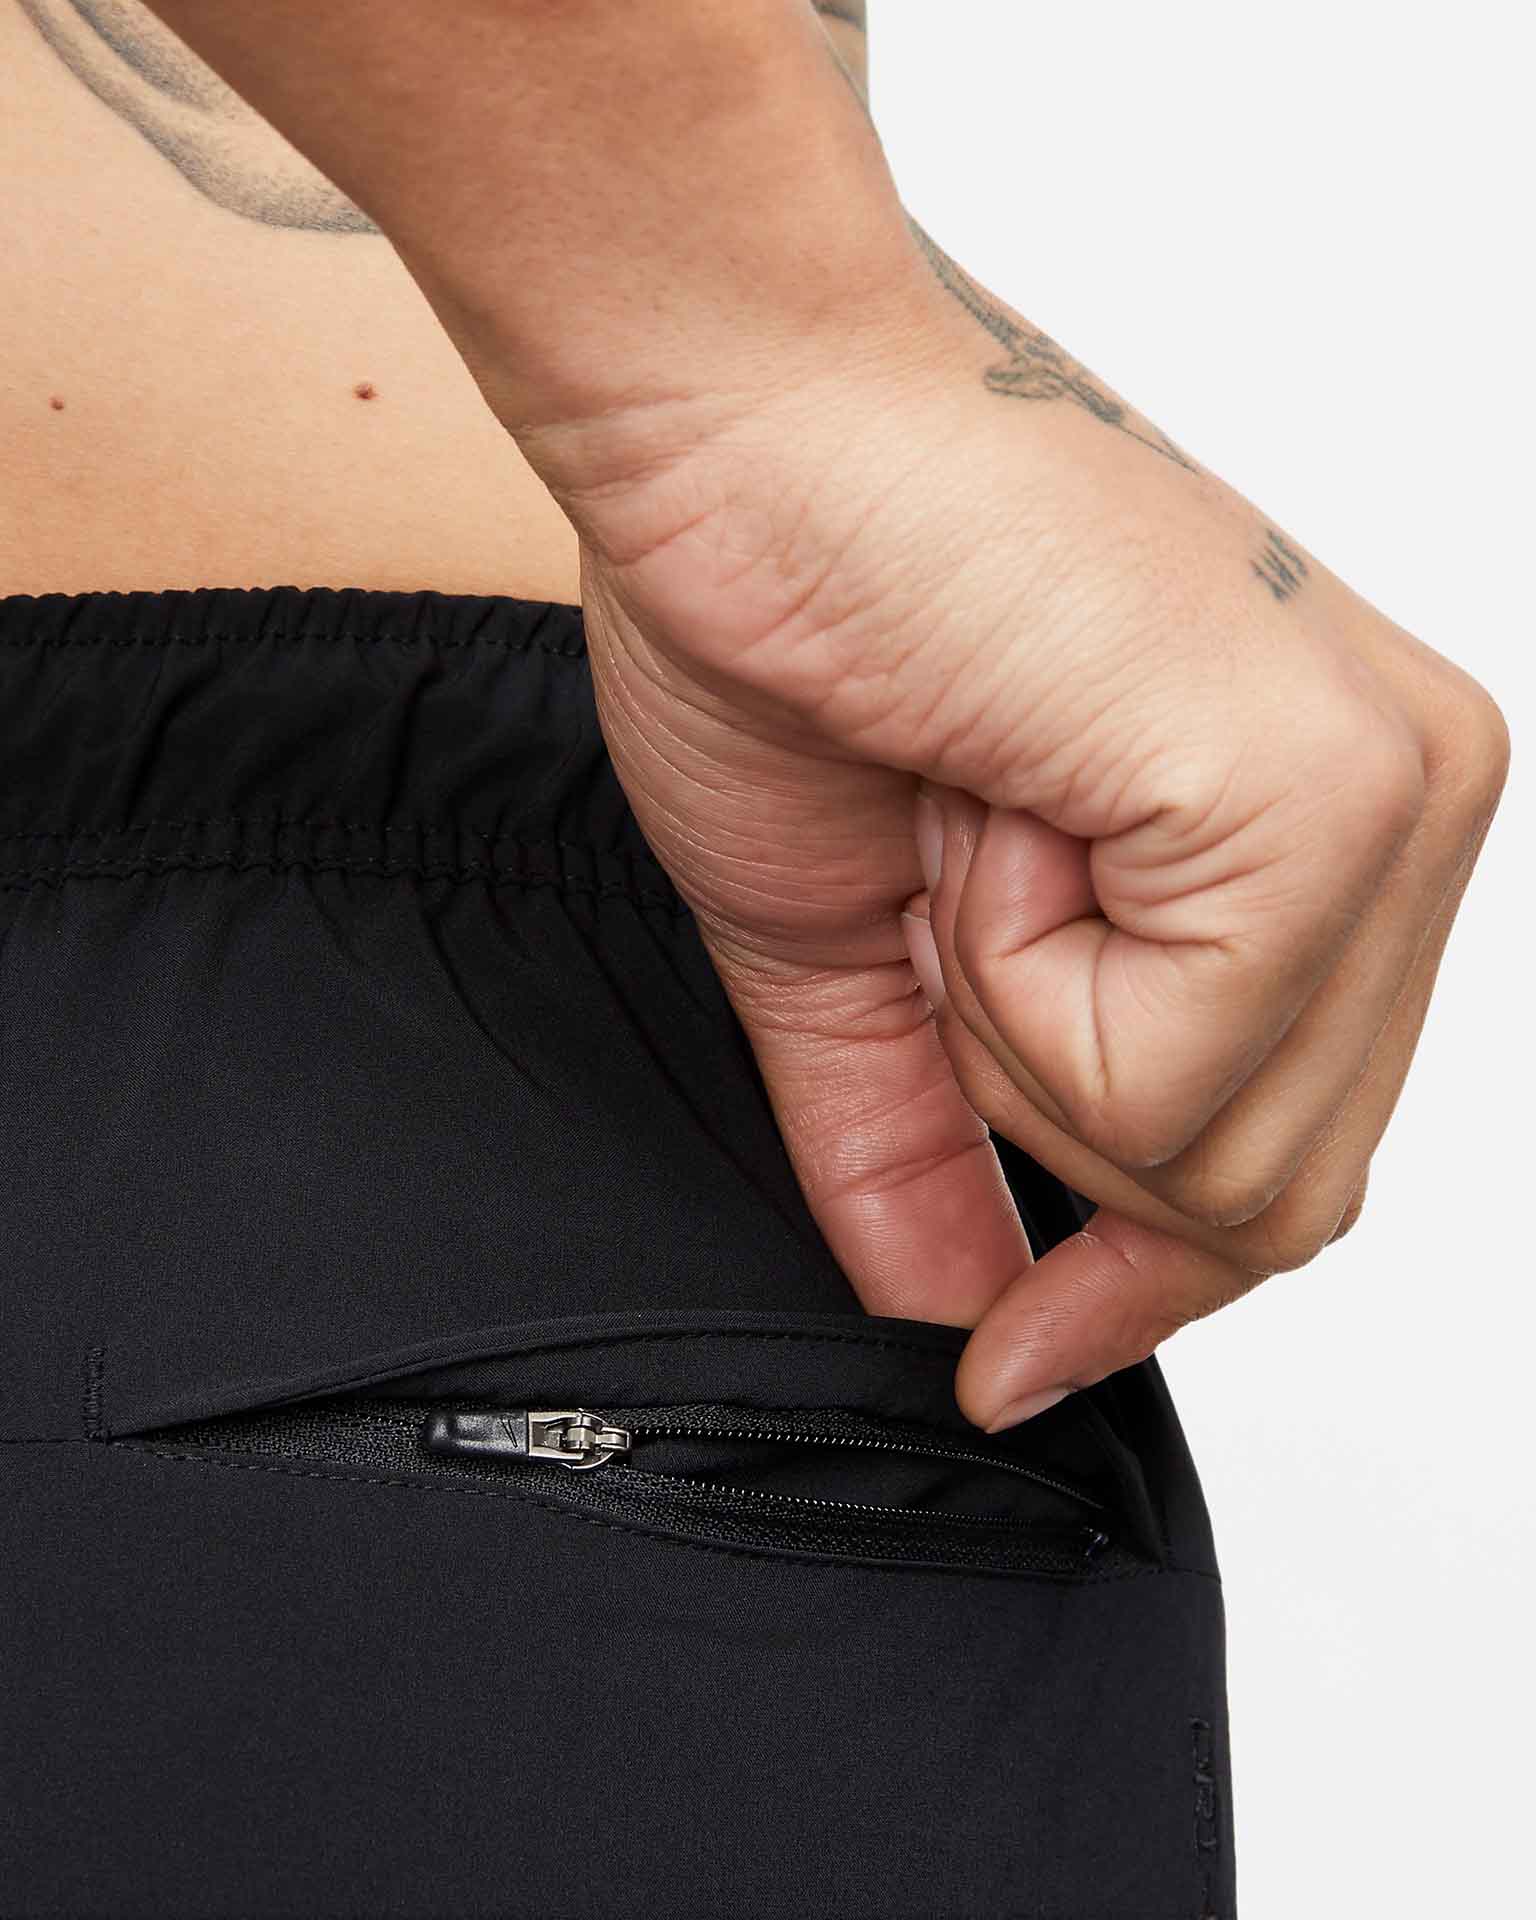 Pantalones cortos Nike Dri-FIT ilimitados